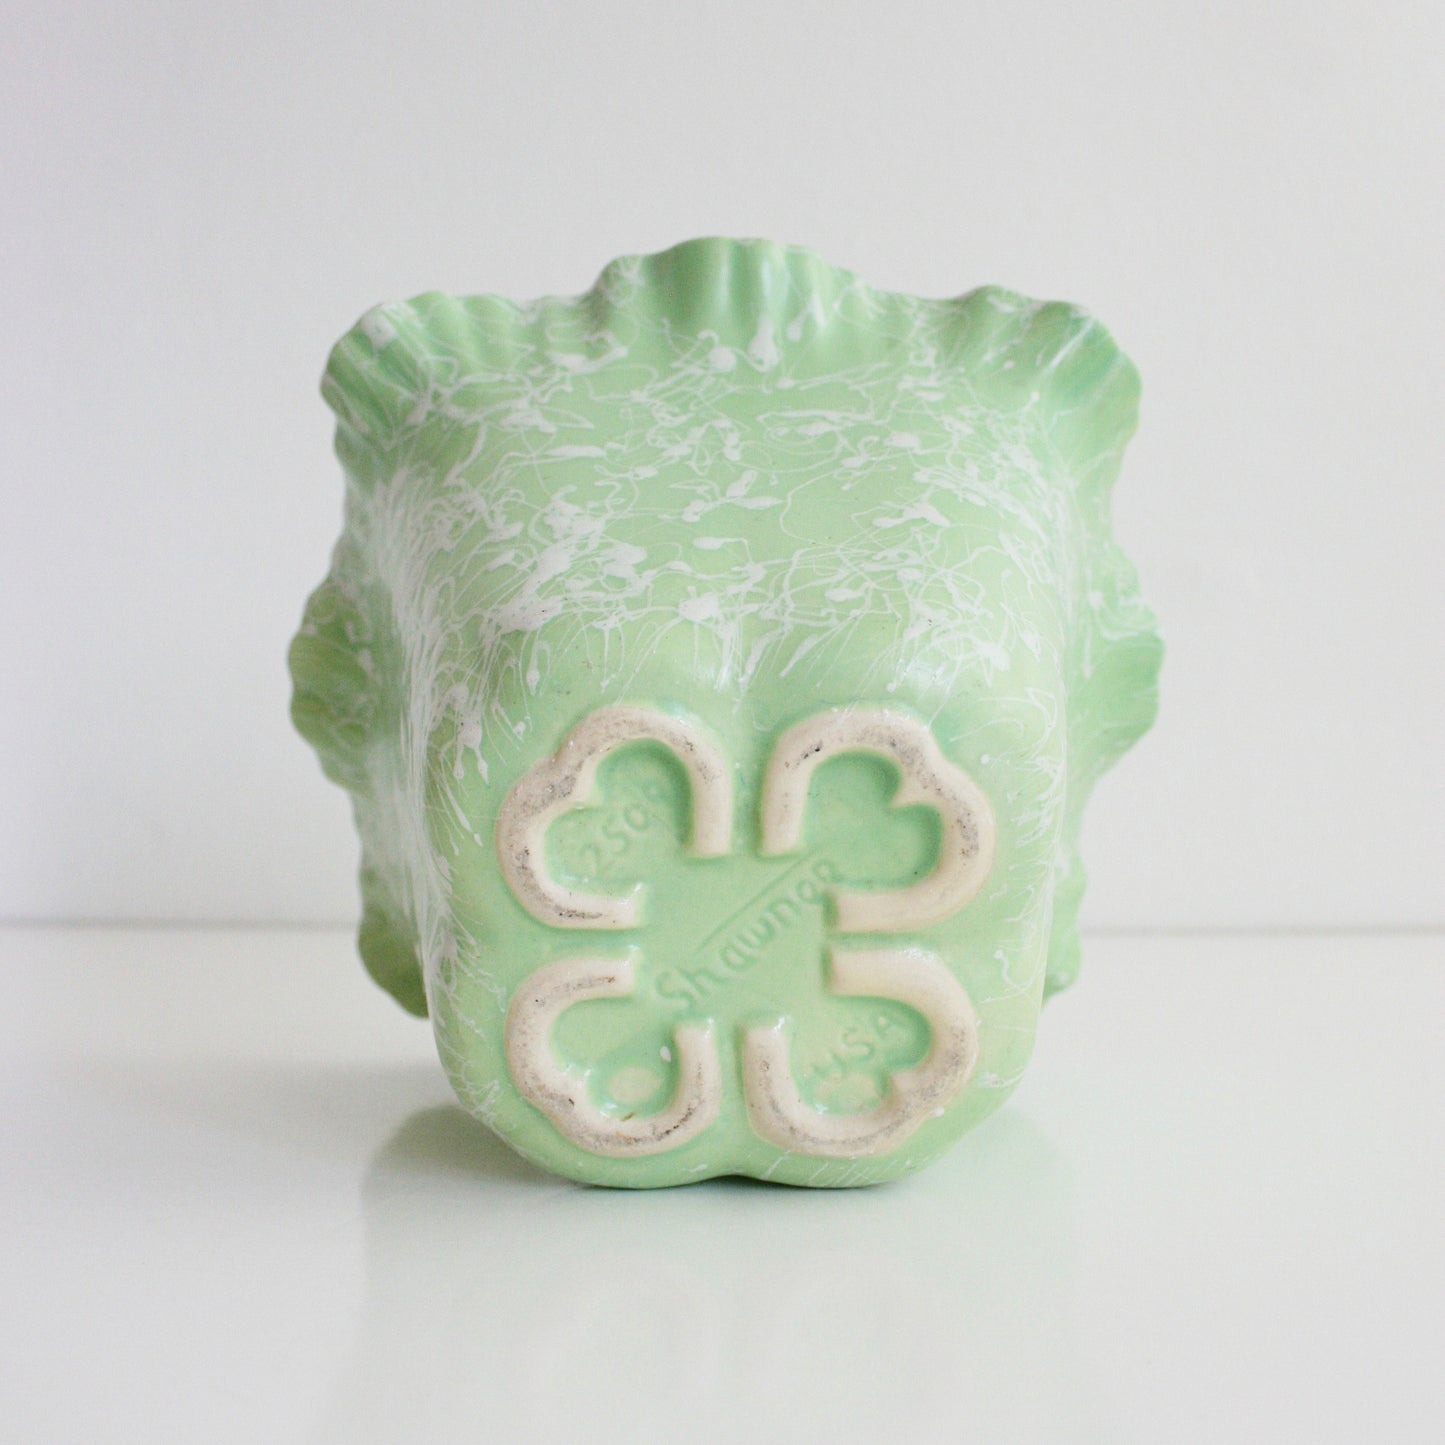 SOLD - Mid Century Modern Mint Green Splatter Glaze Cameo Planter by Shawnee